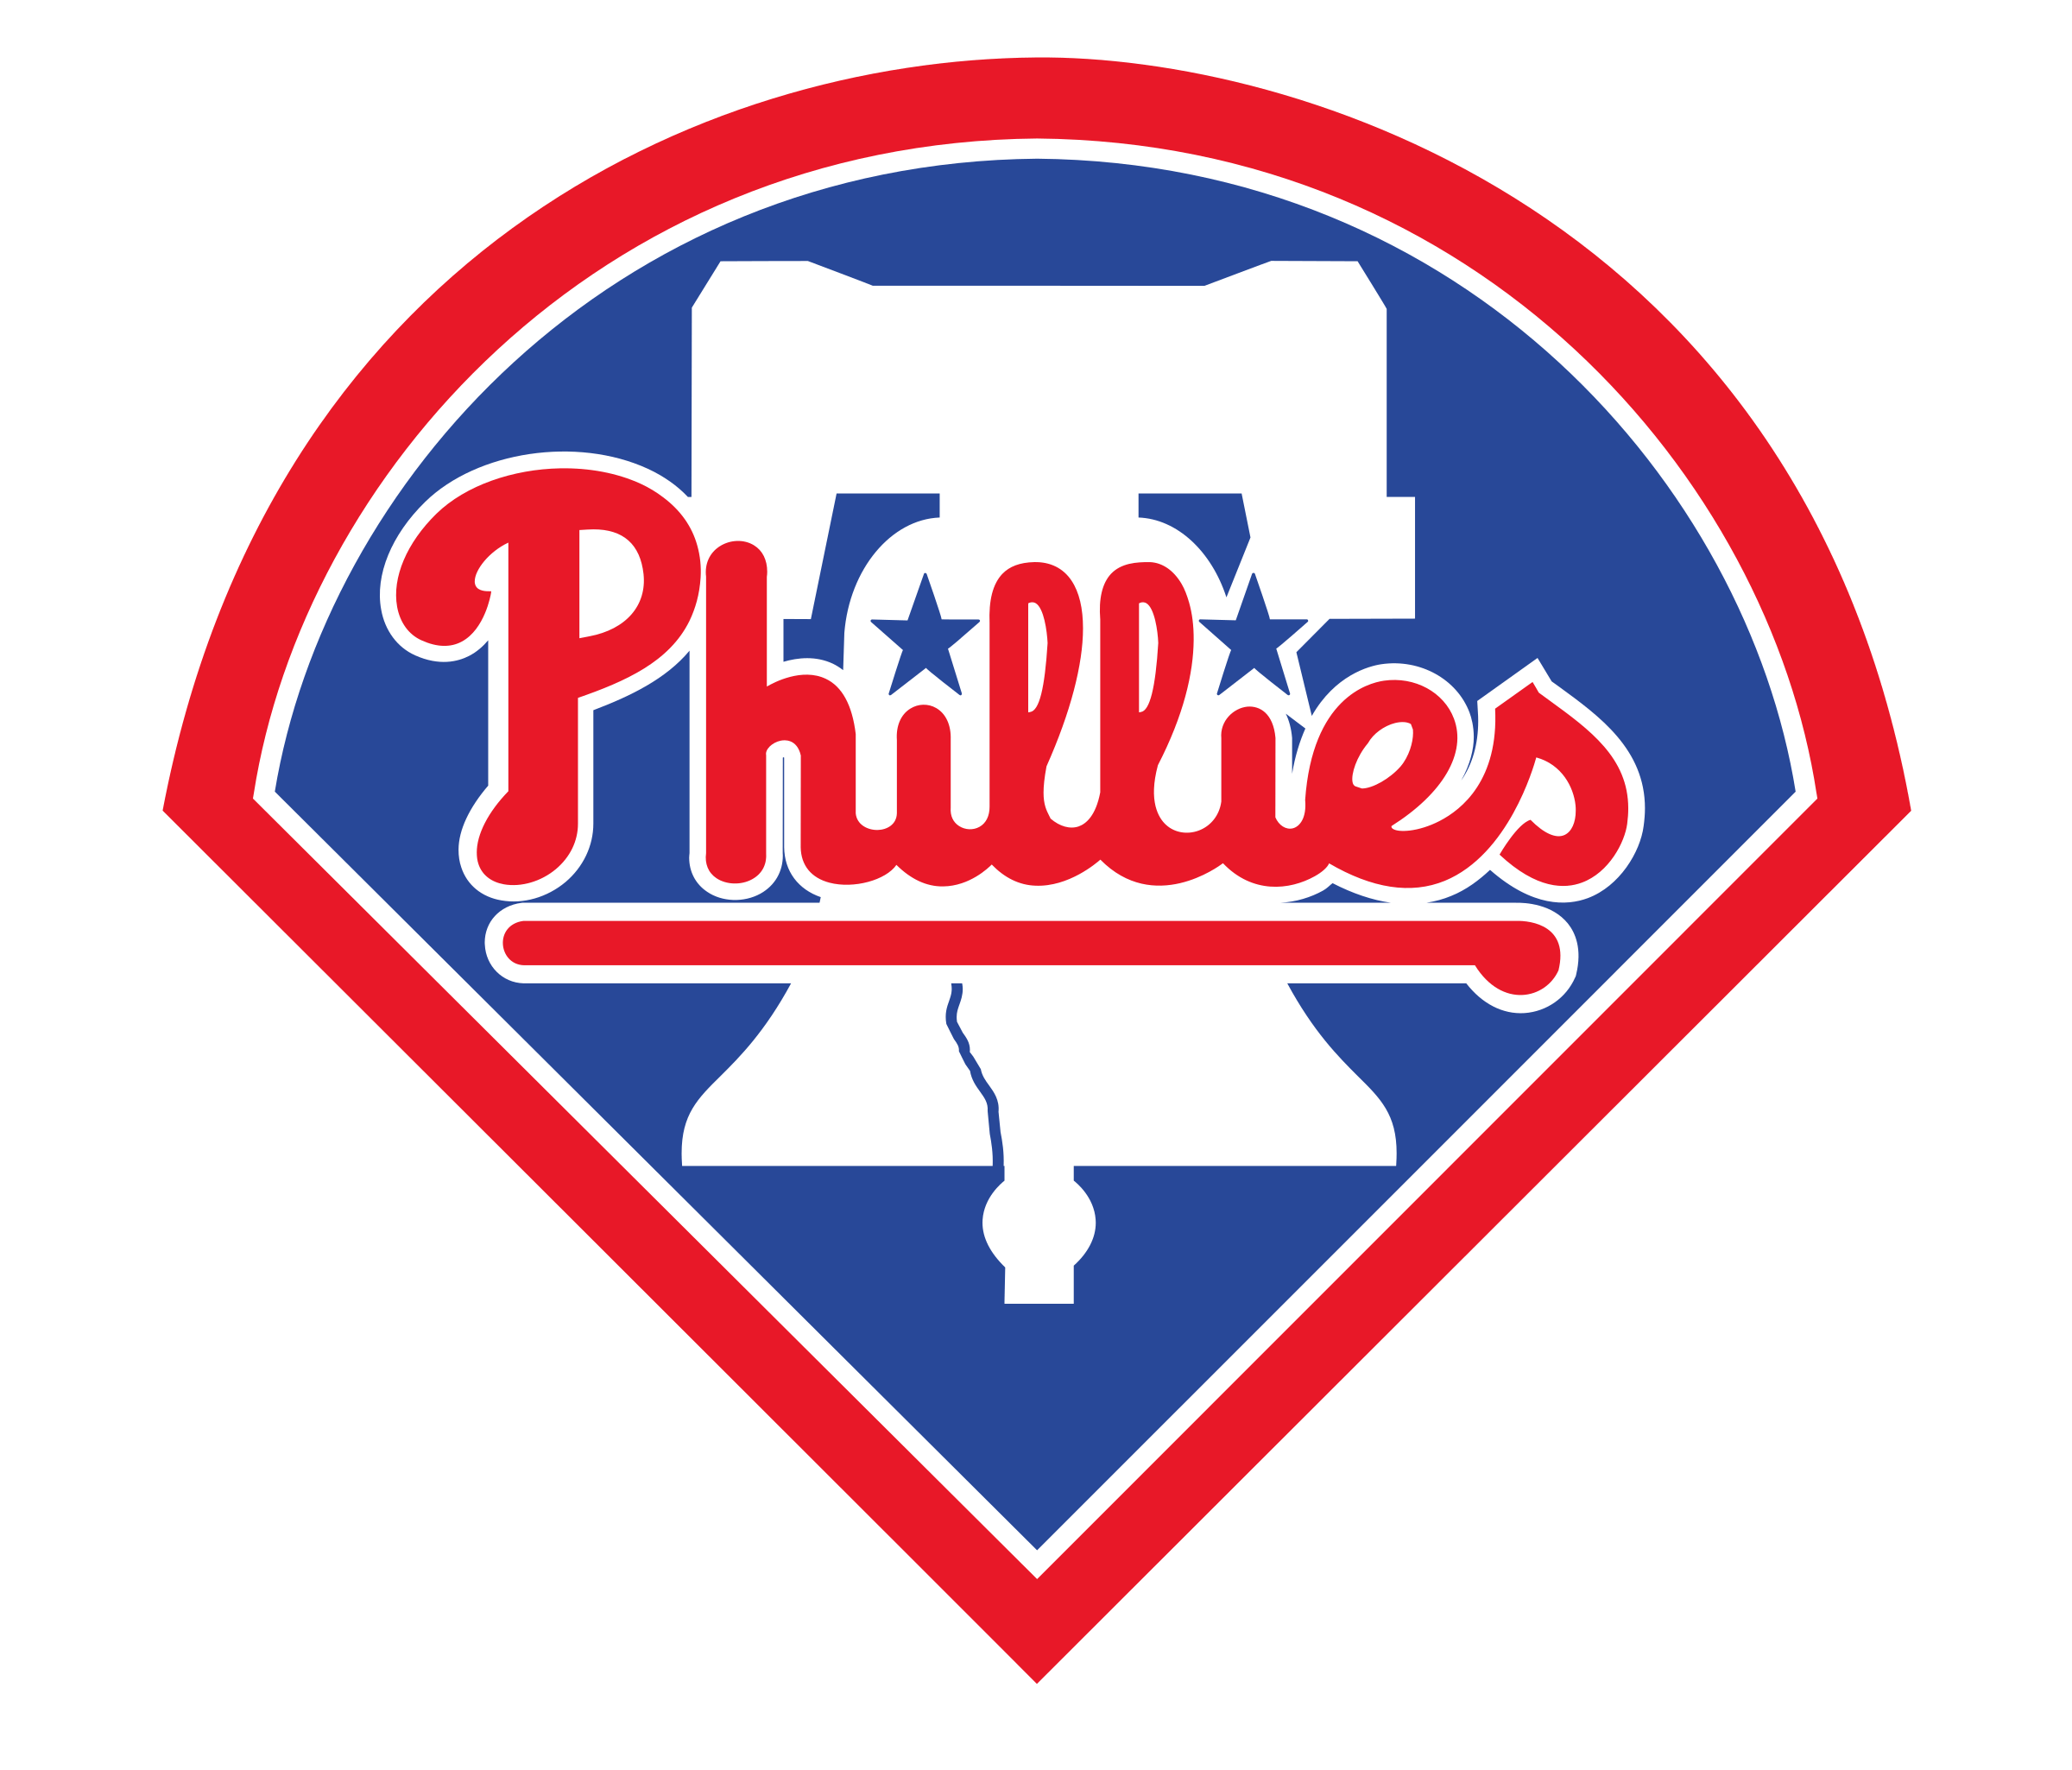 Phillies Logo - Philadelphia Phillies Logo PNG Transparent & SVG Vector - Freebie Supply